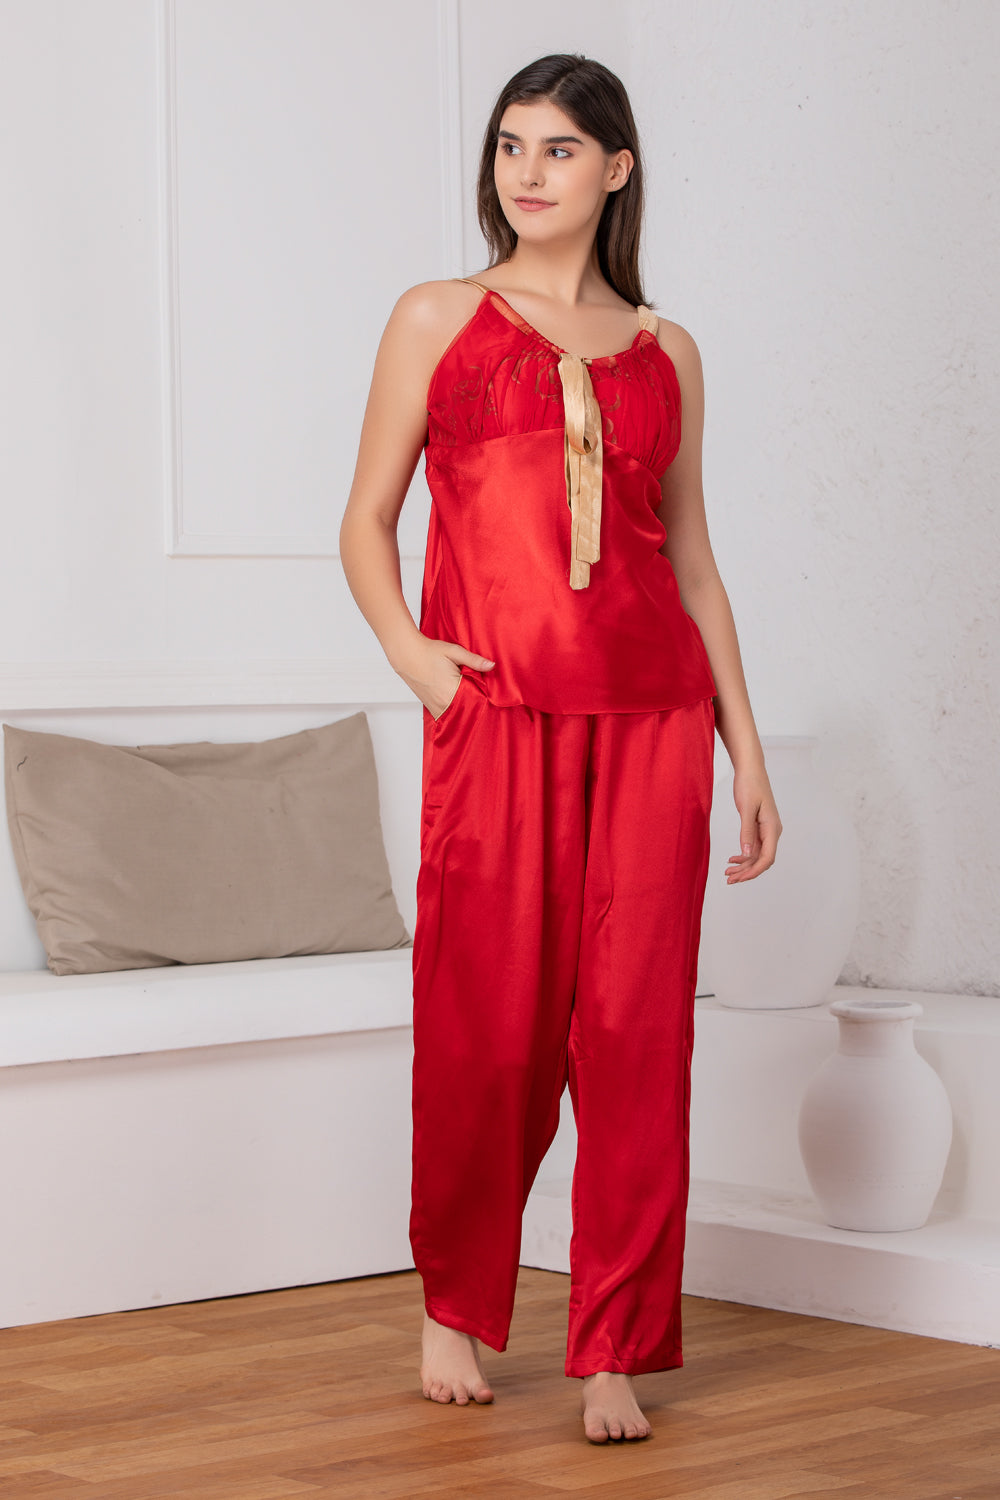 La Lingerie - Sexy Night Wear - Lace-Trim Slip - Red-Multi - La Lingerie